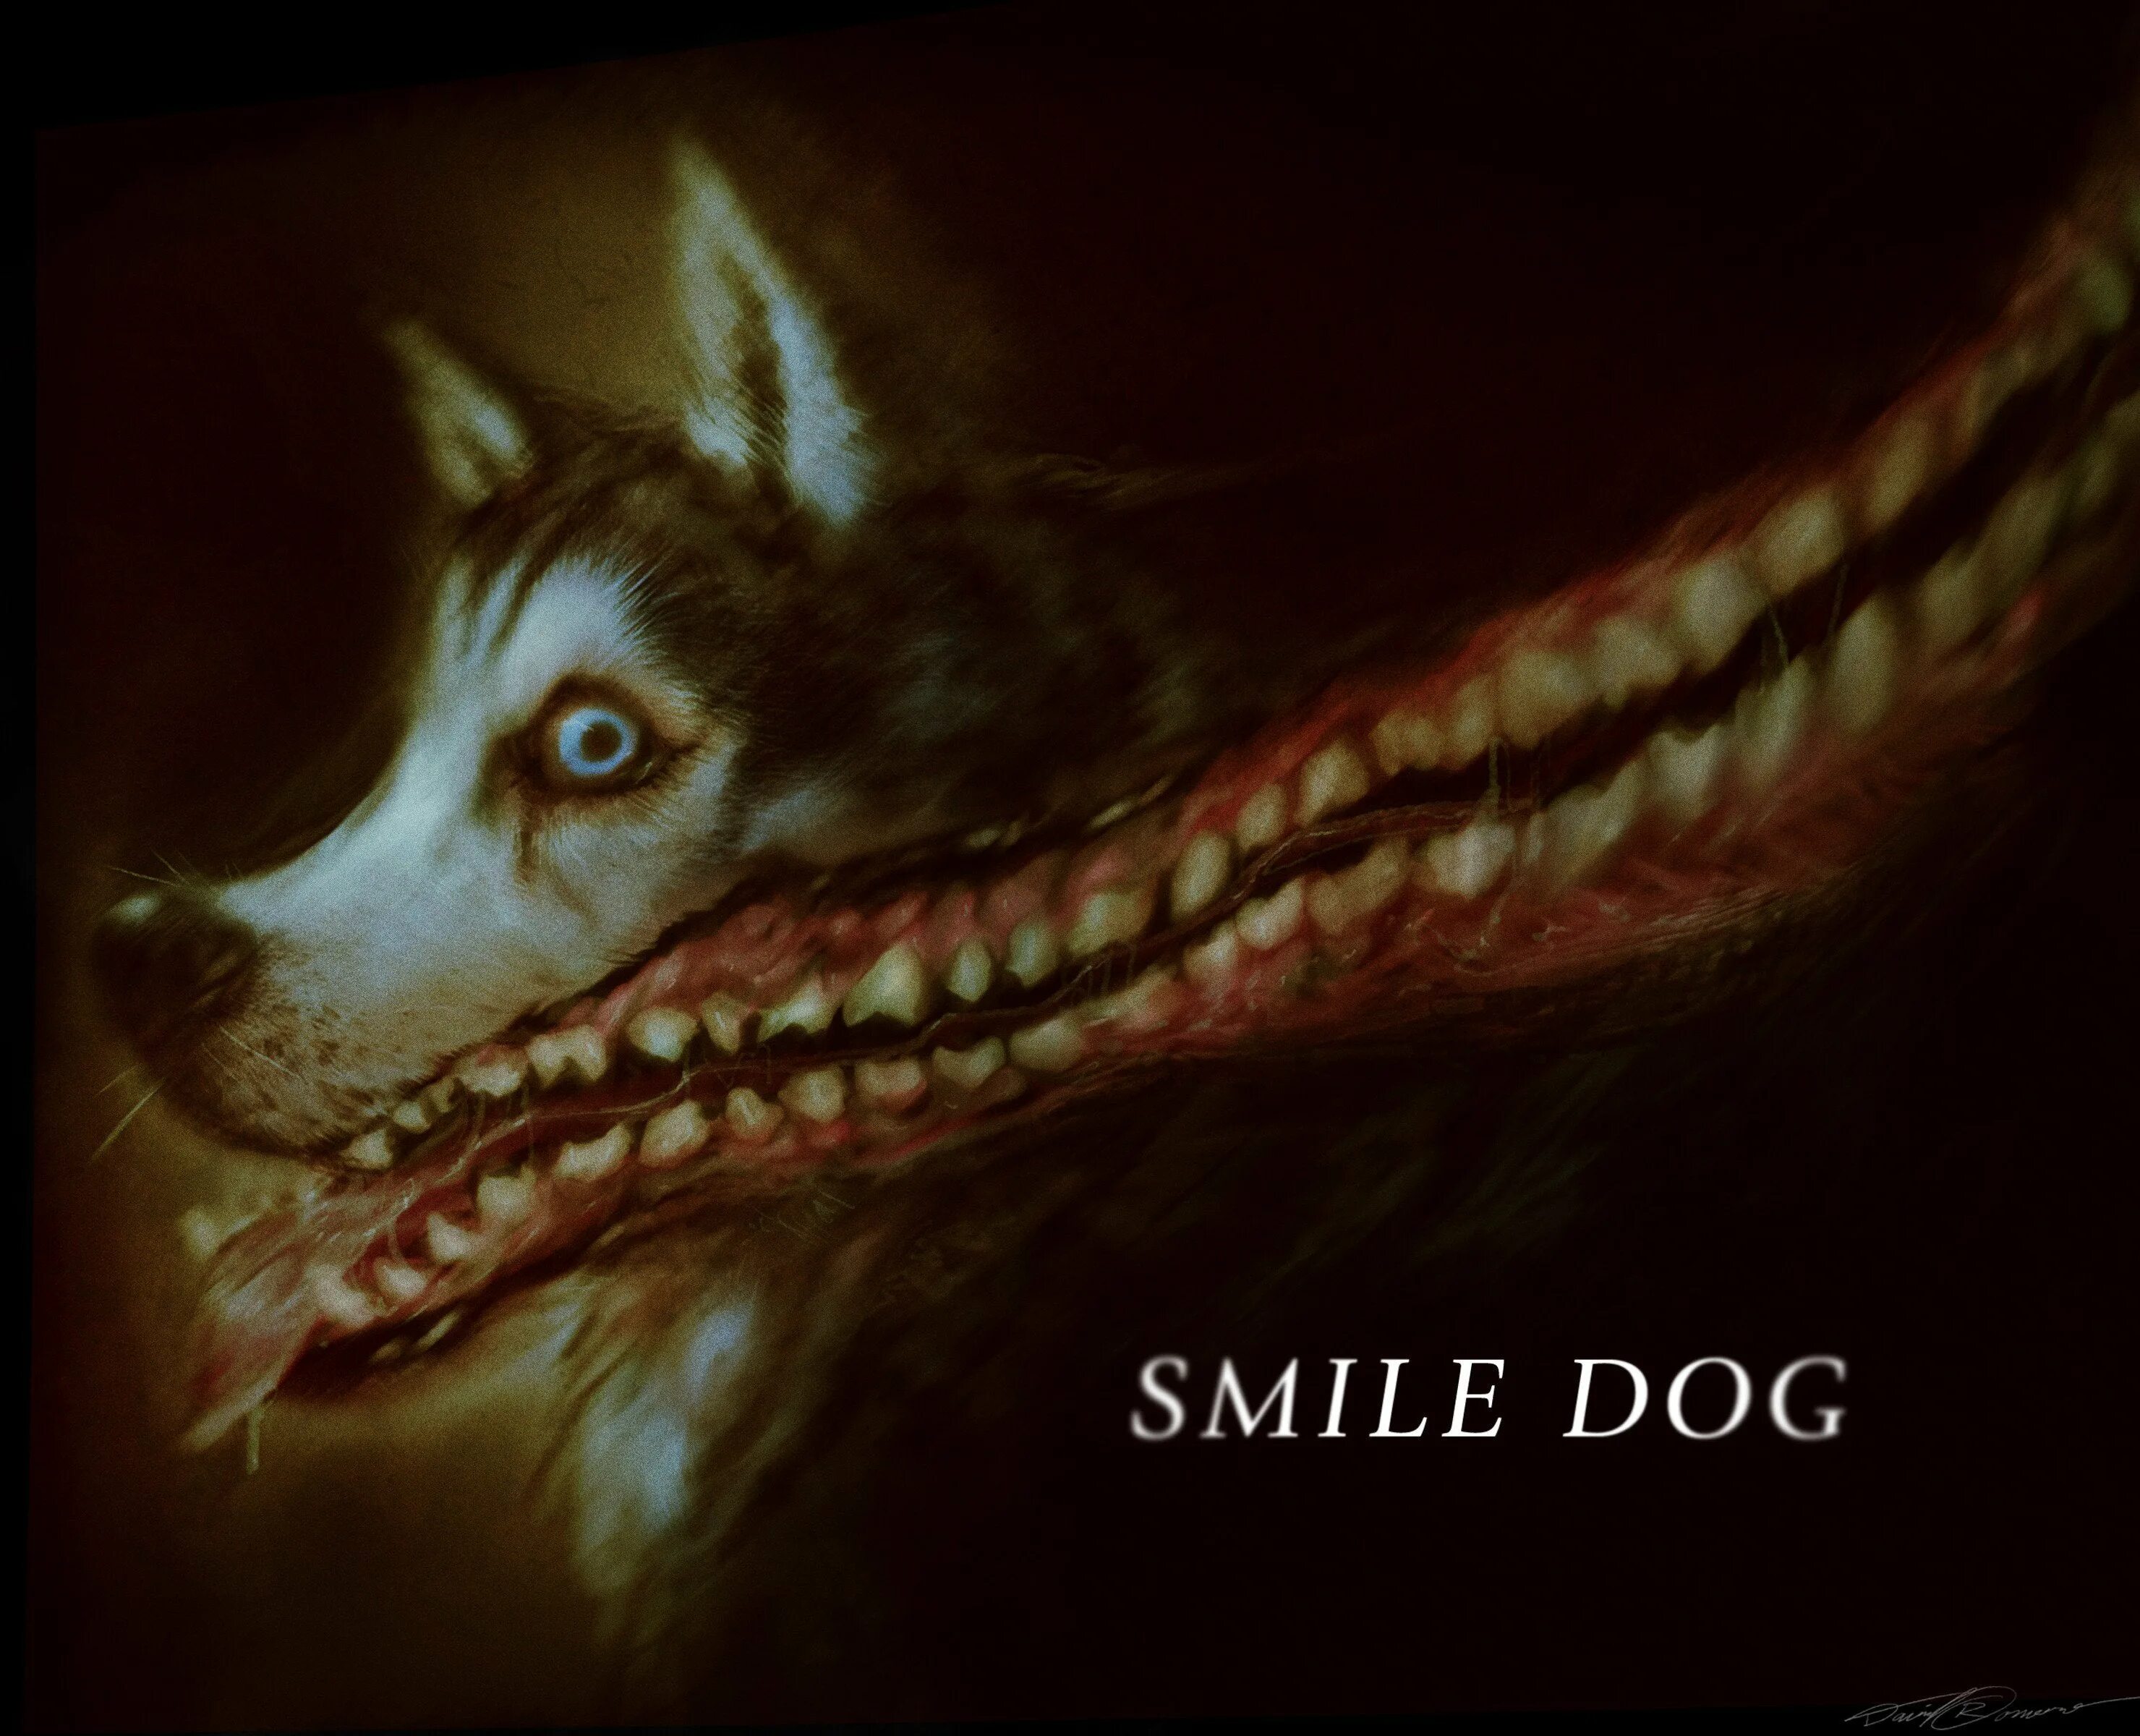 Собака улыбака крипипаста. Смайл дог крипипаста оригинал. Крипипаста улыбающийся пес дог.